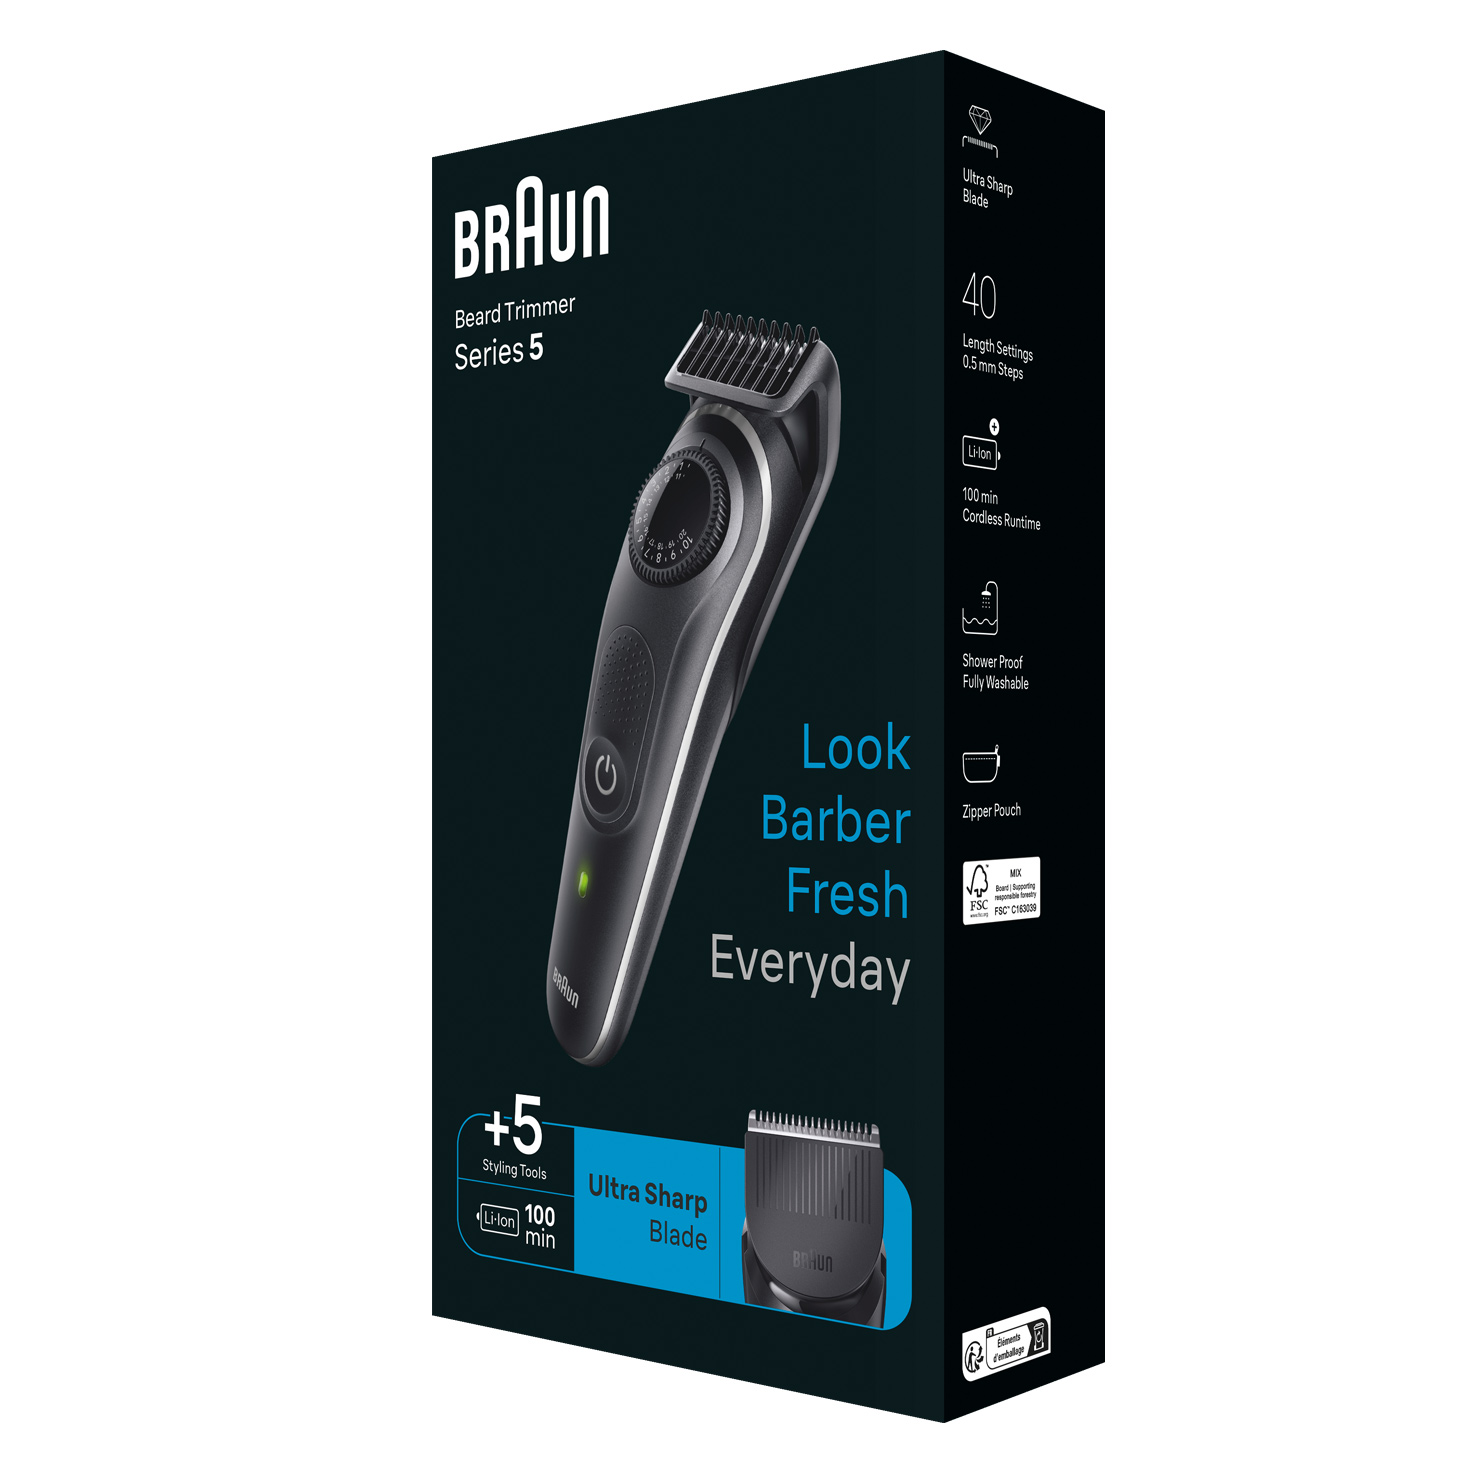 BT Braun 5 5 Beard 5421 With Nordics Trimmer Braun Barbering Series Tools- Black/Grey |